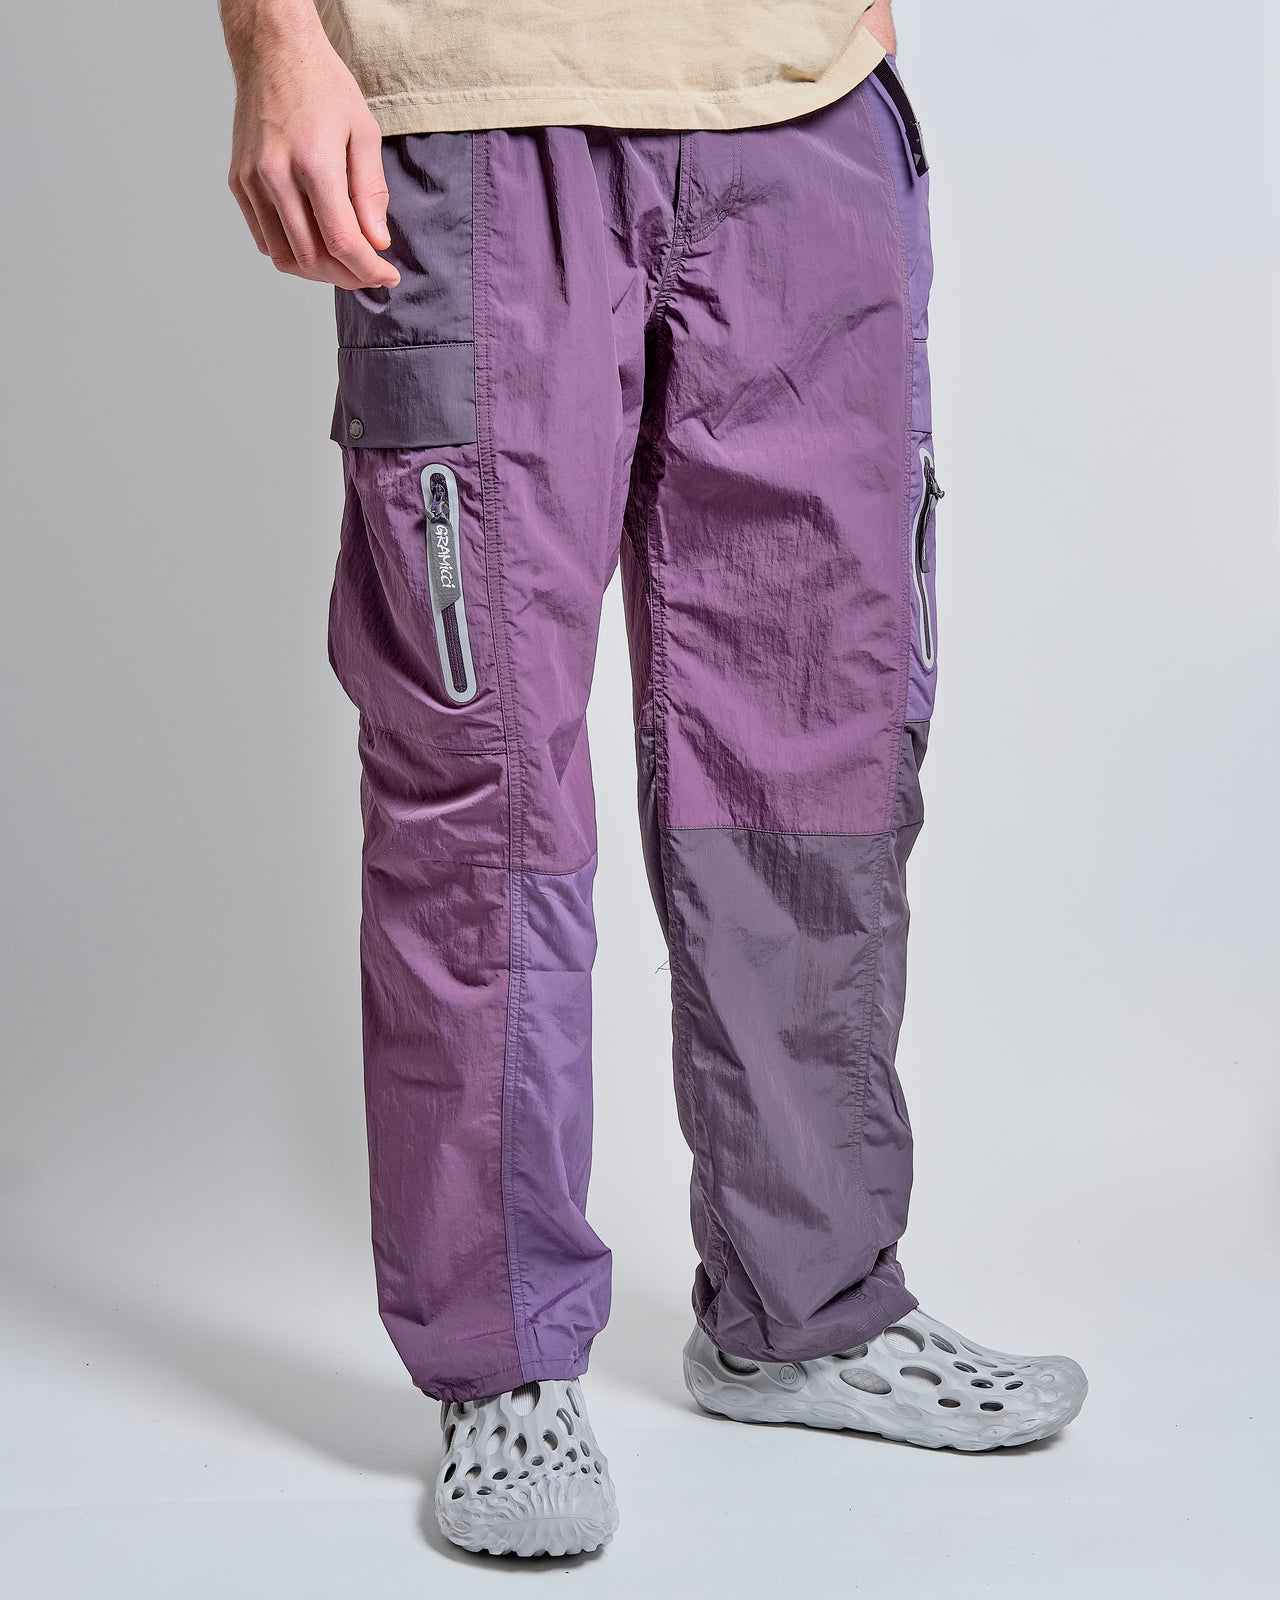 Patchwork Wind Pant in Multi Purple